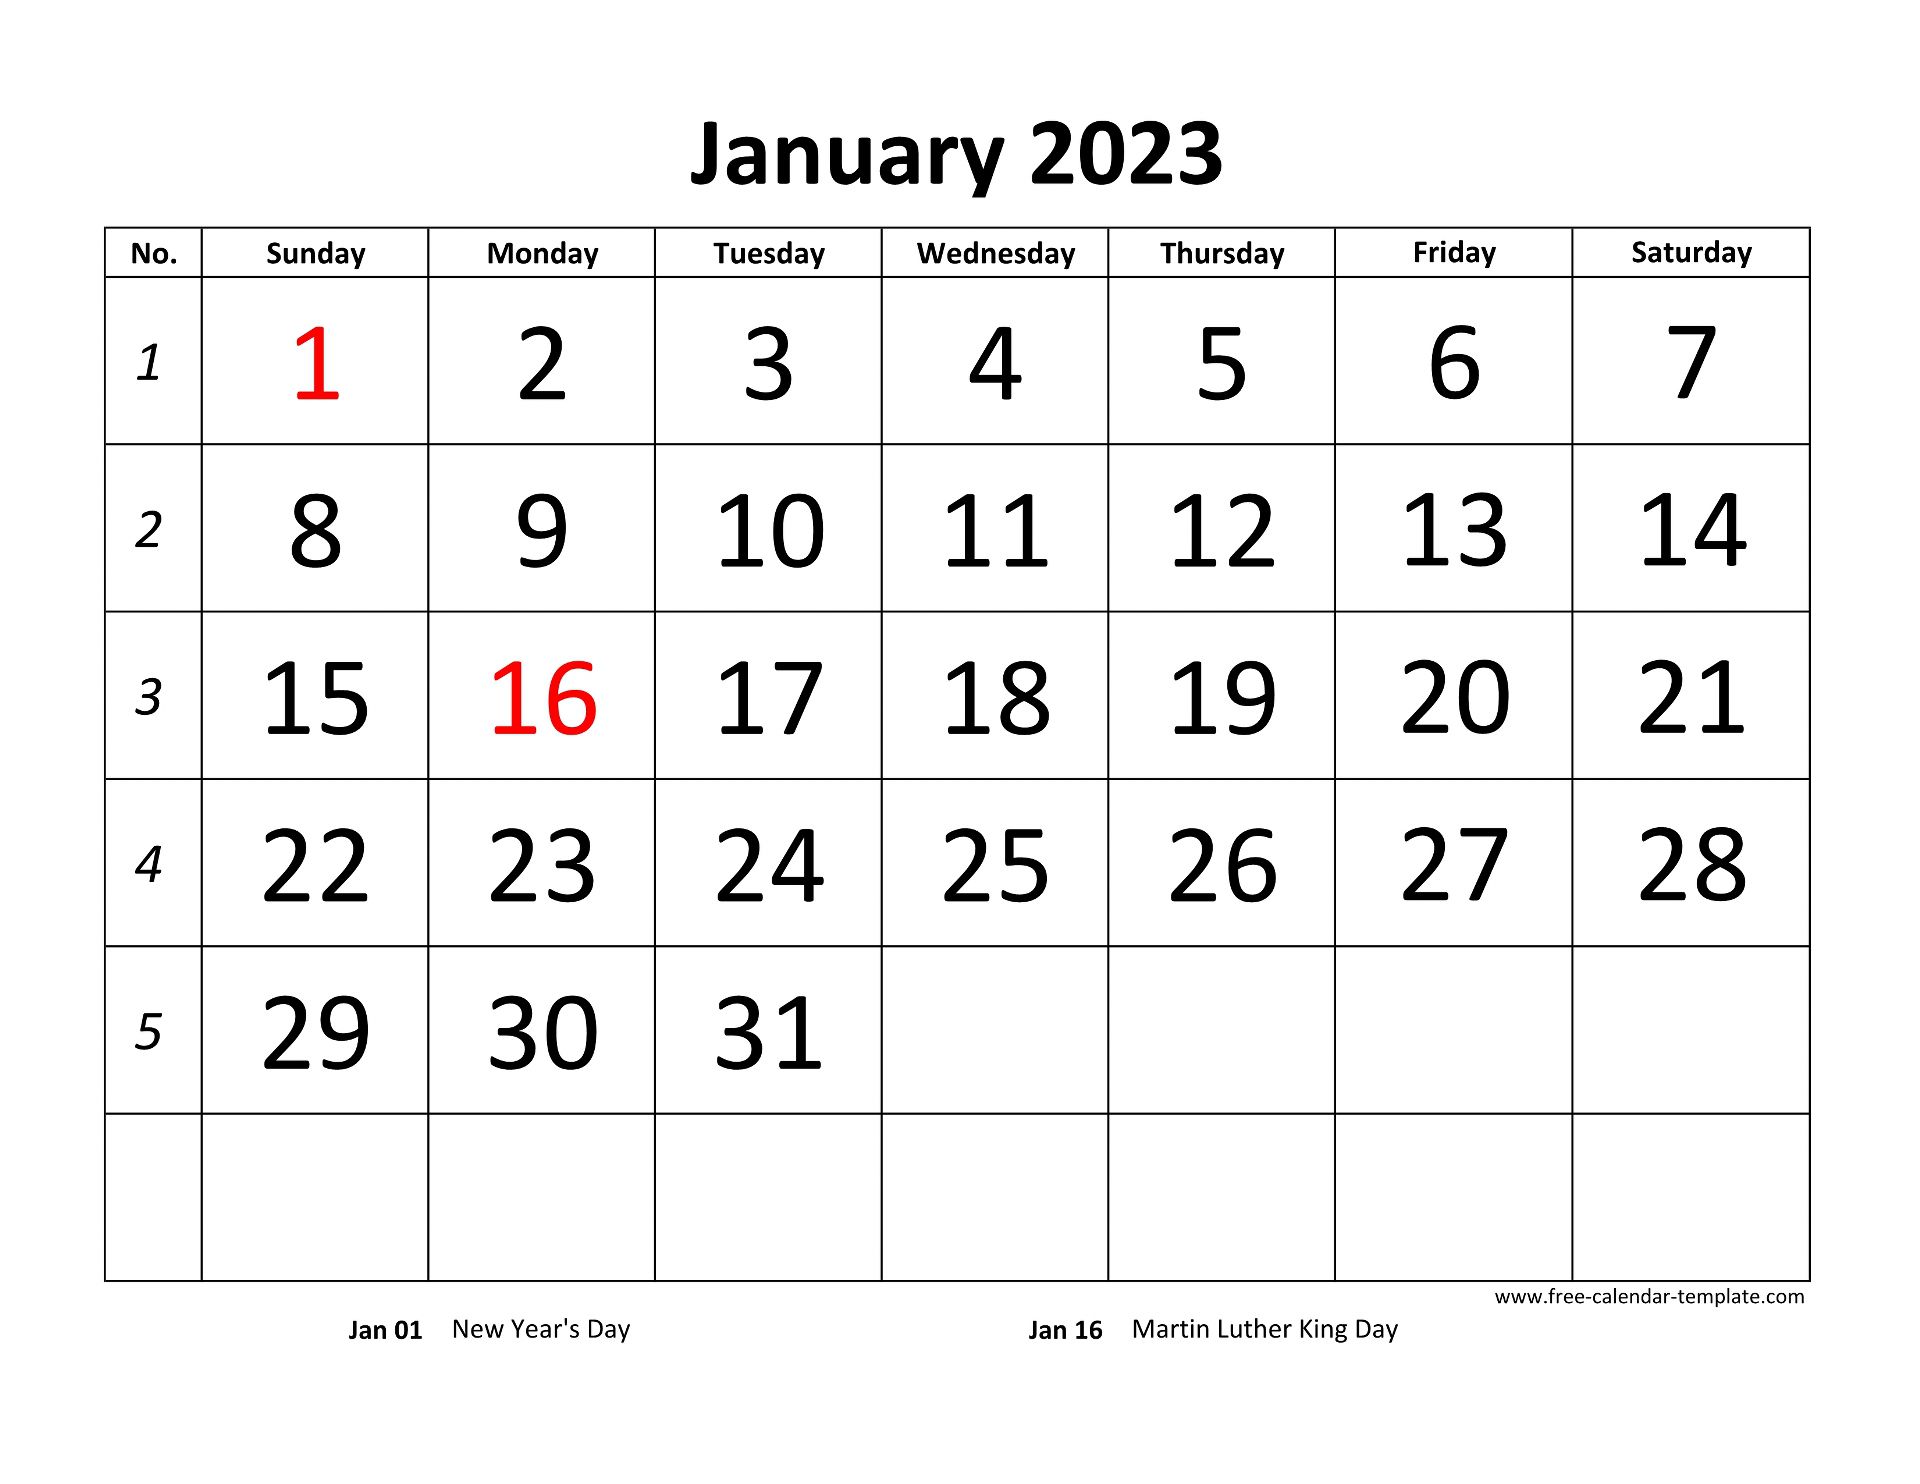 january-2023-free-calendar-tempplate-free-calendar-template